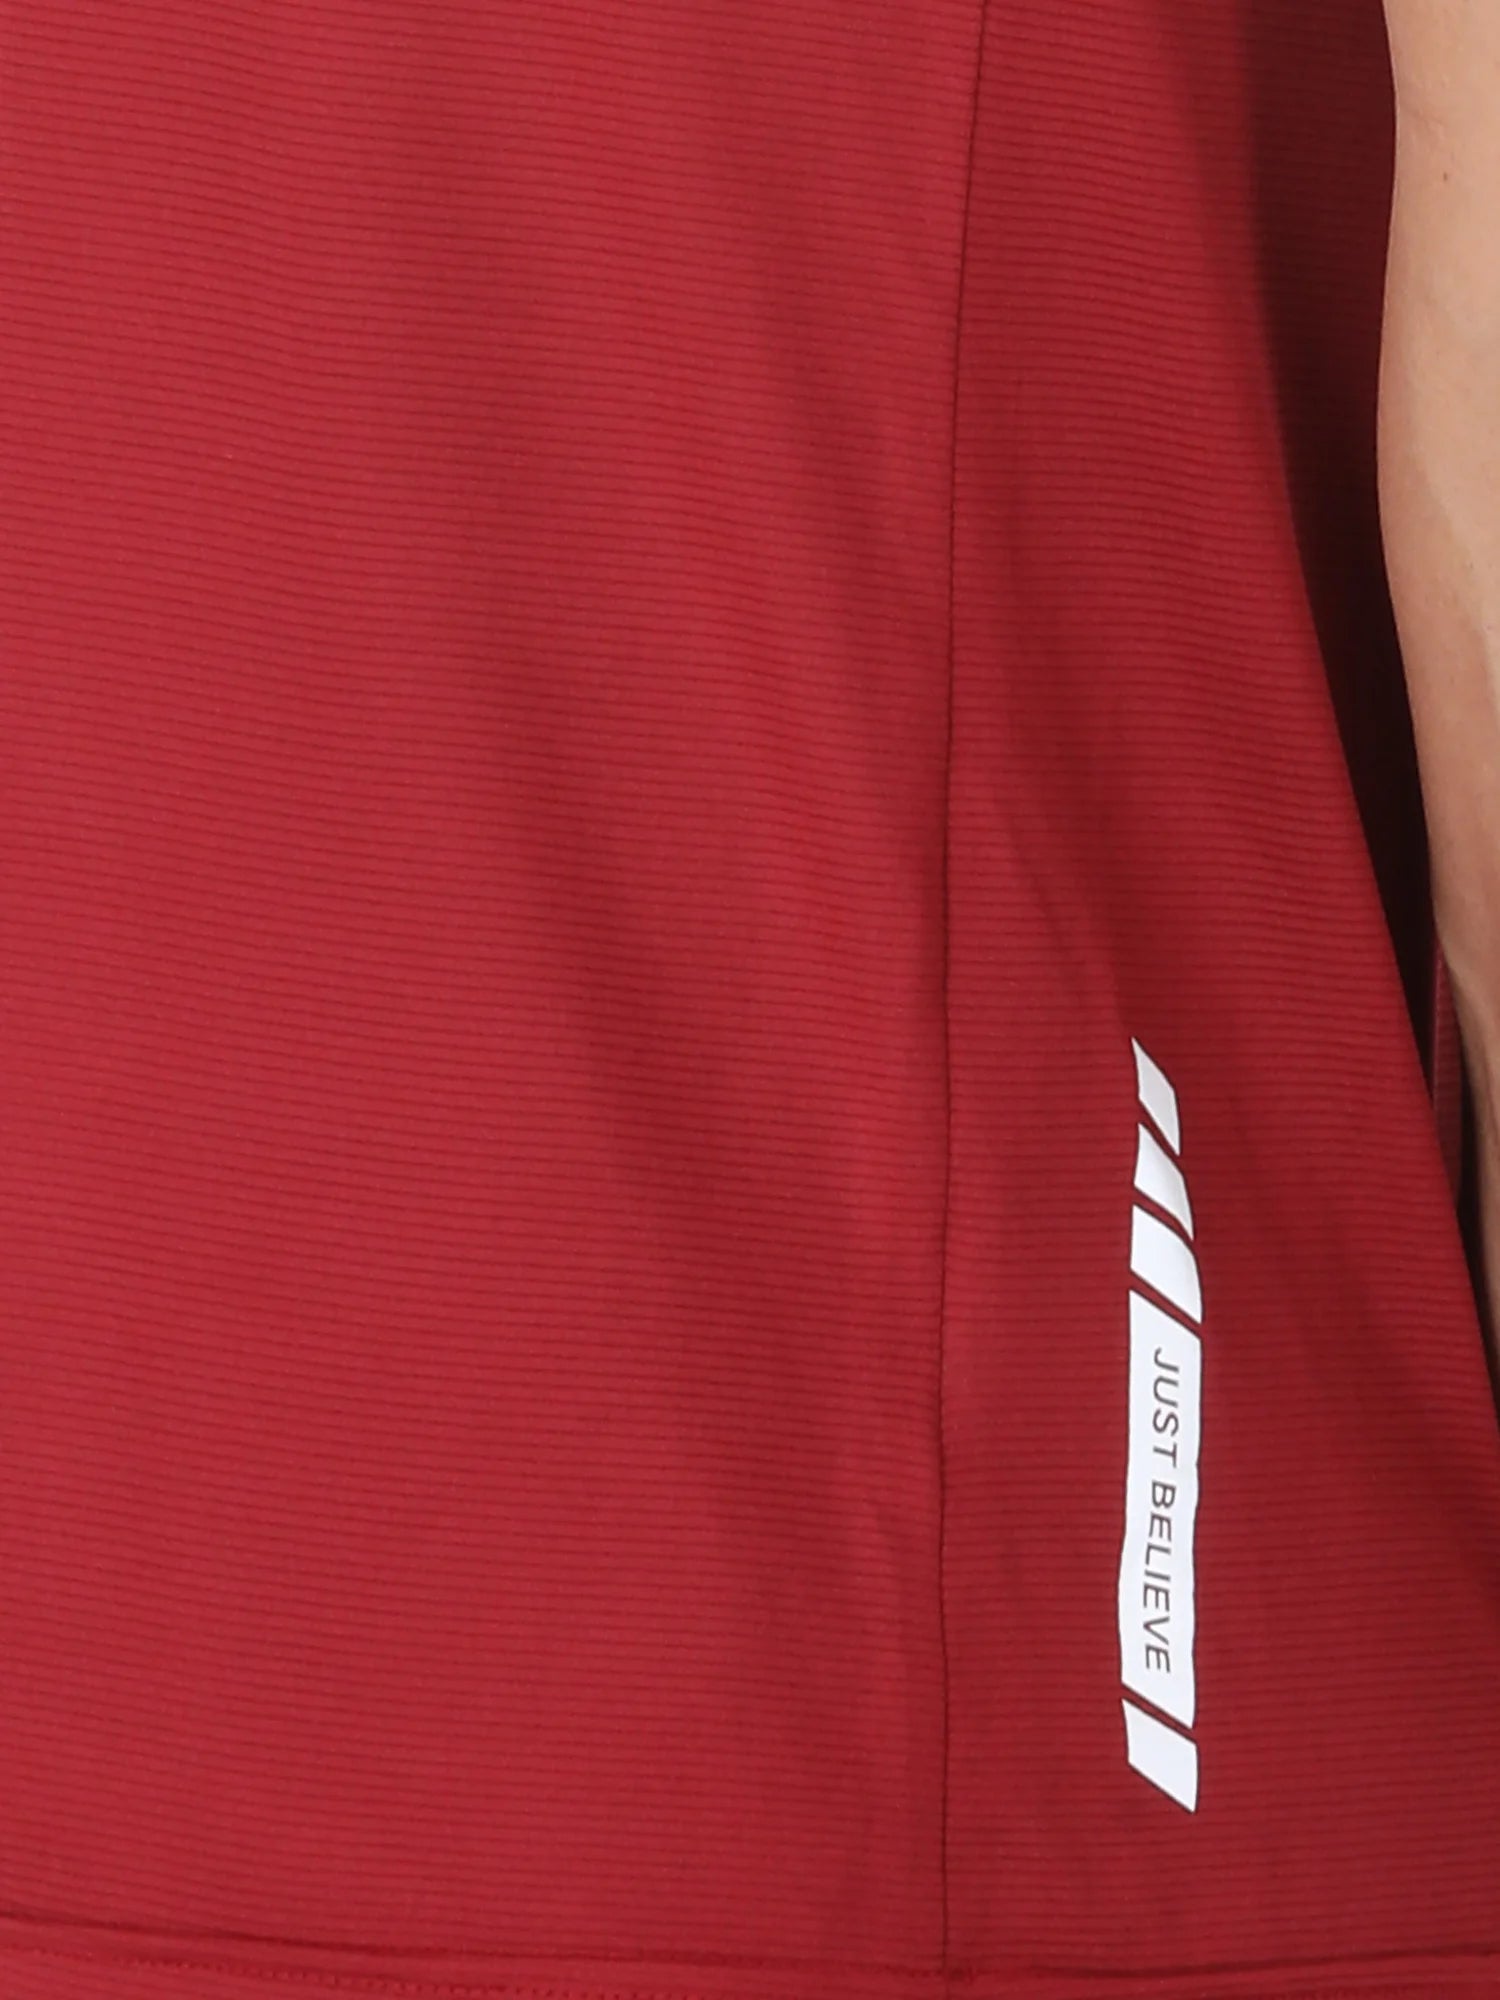 Jeffa Elite Training Vest in Red